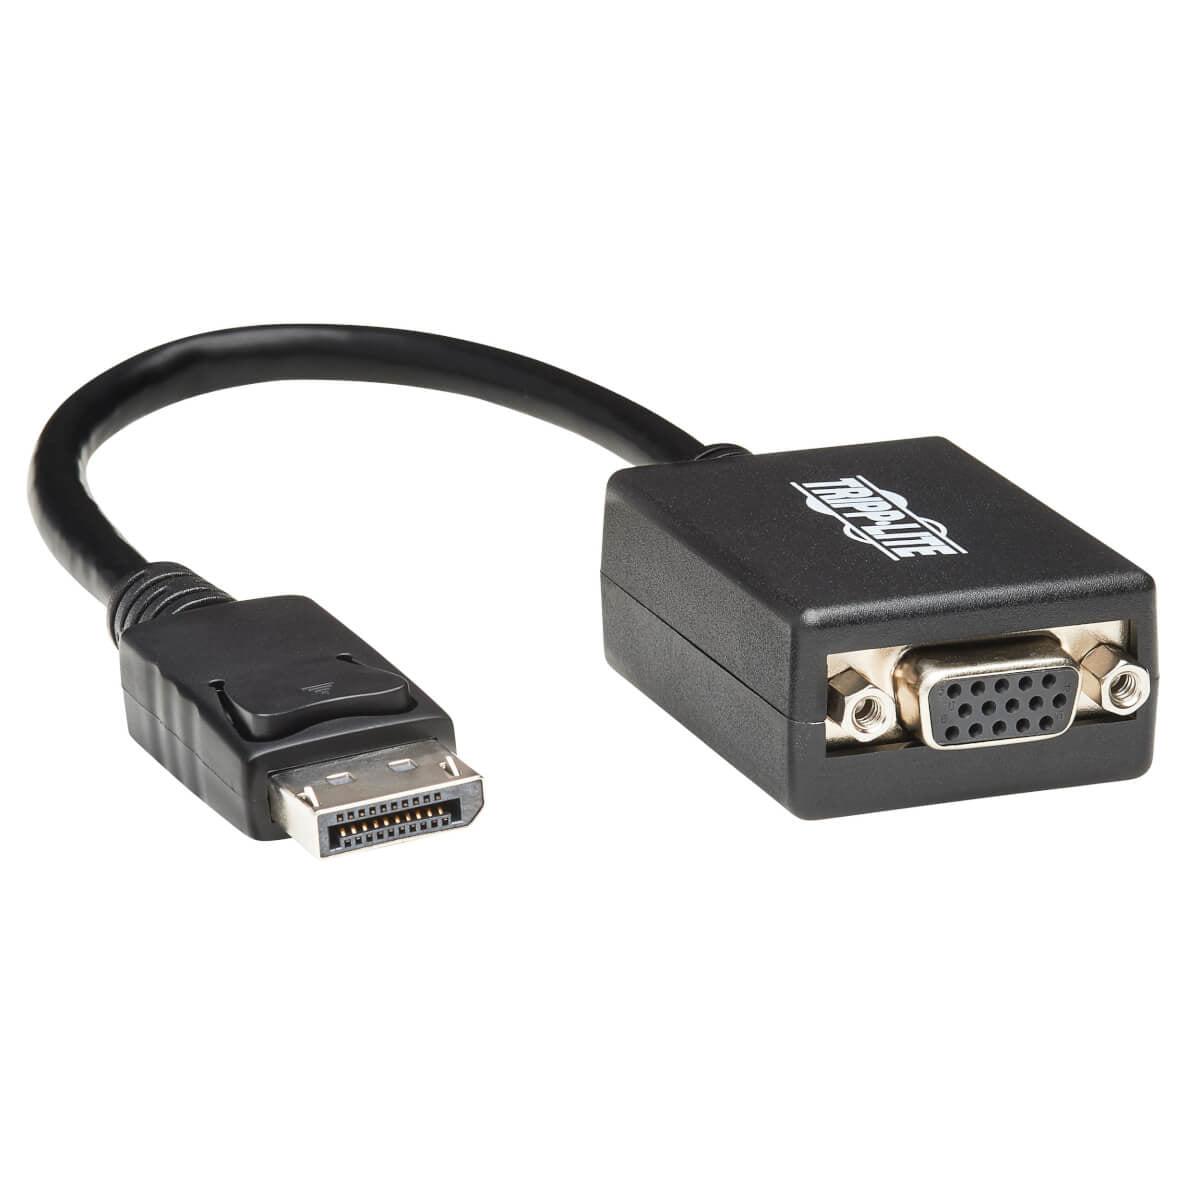 Tripp Lite P134-06N-Vga-Bp Displayport To Vga Active Adapter Video Converter (M/F), 6-In. (15.24 Cm), 50 Pack